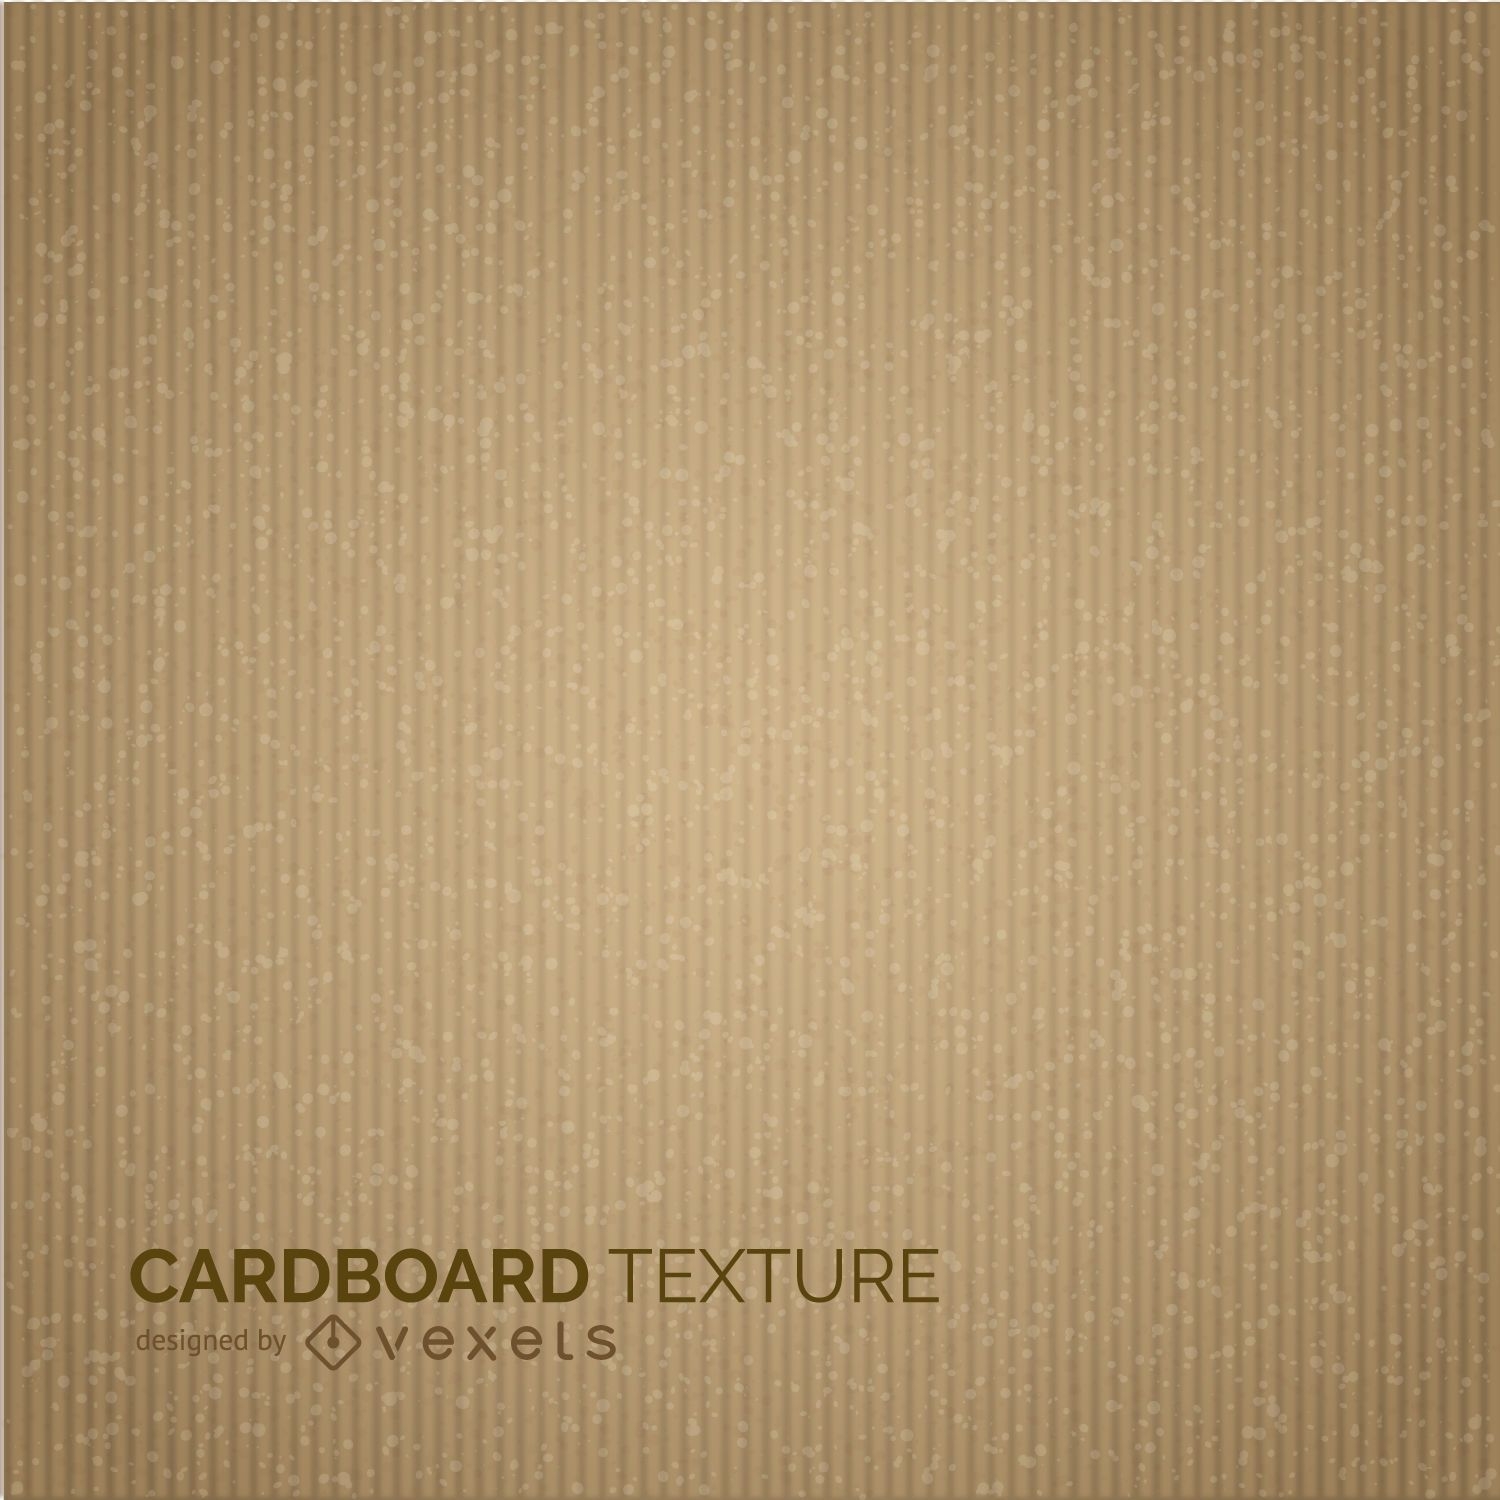 Cardboard Texture design in sepia